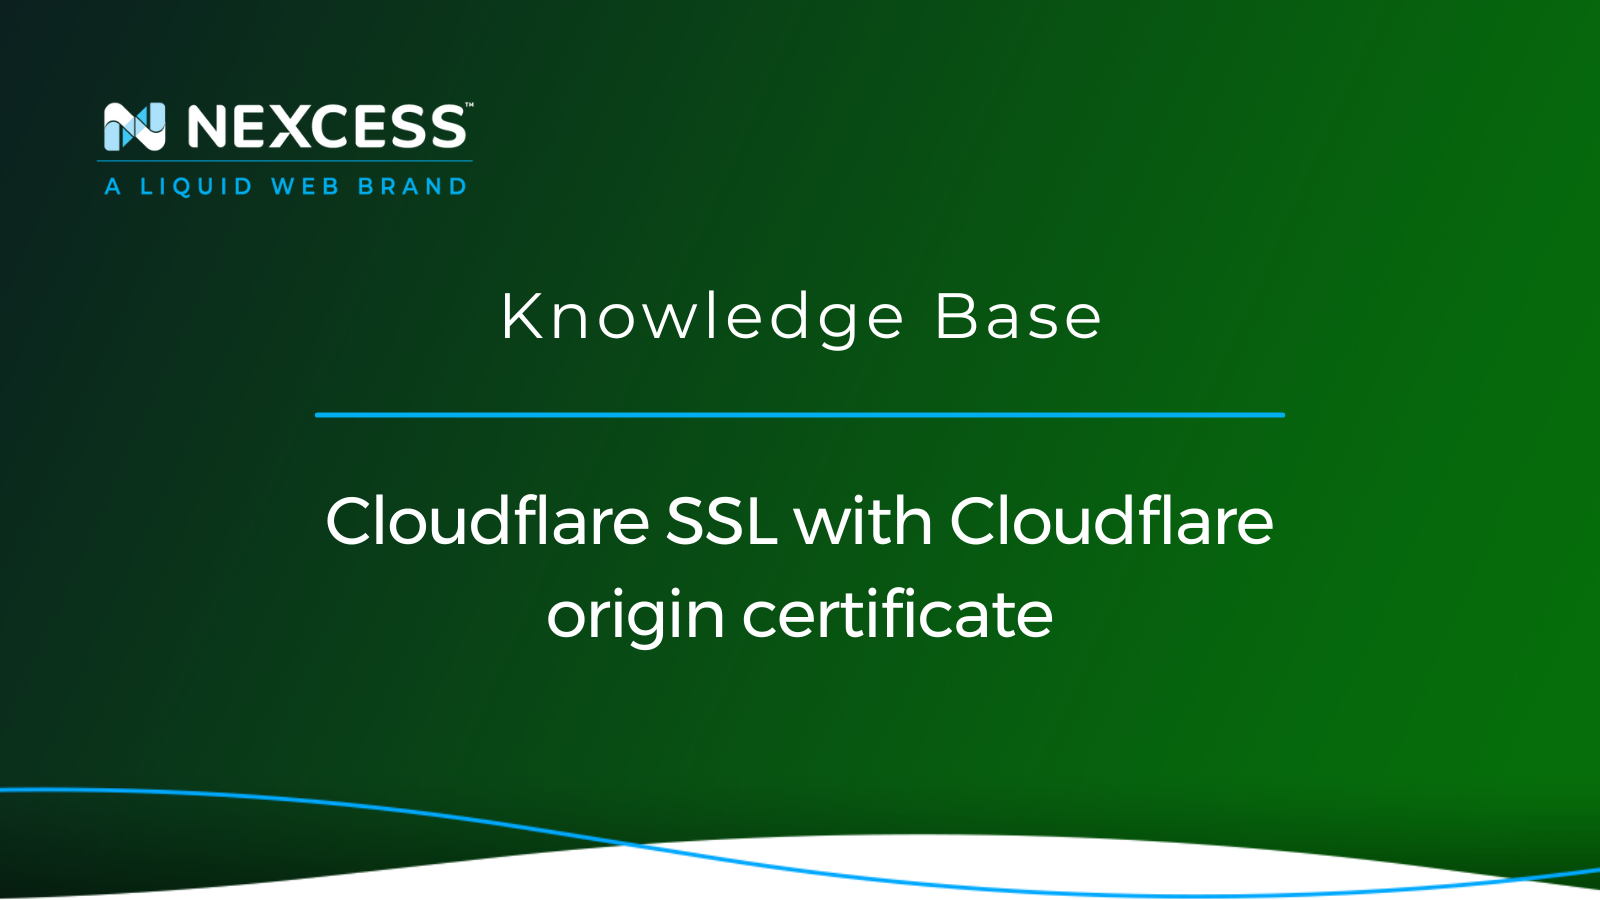 Cloudflare SSL with Cloudflare origin certificate